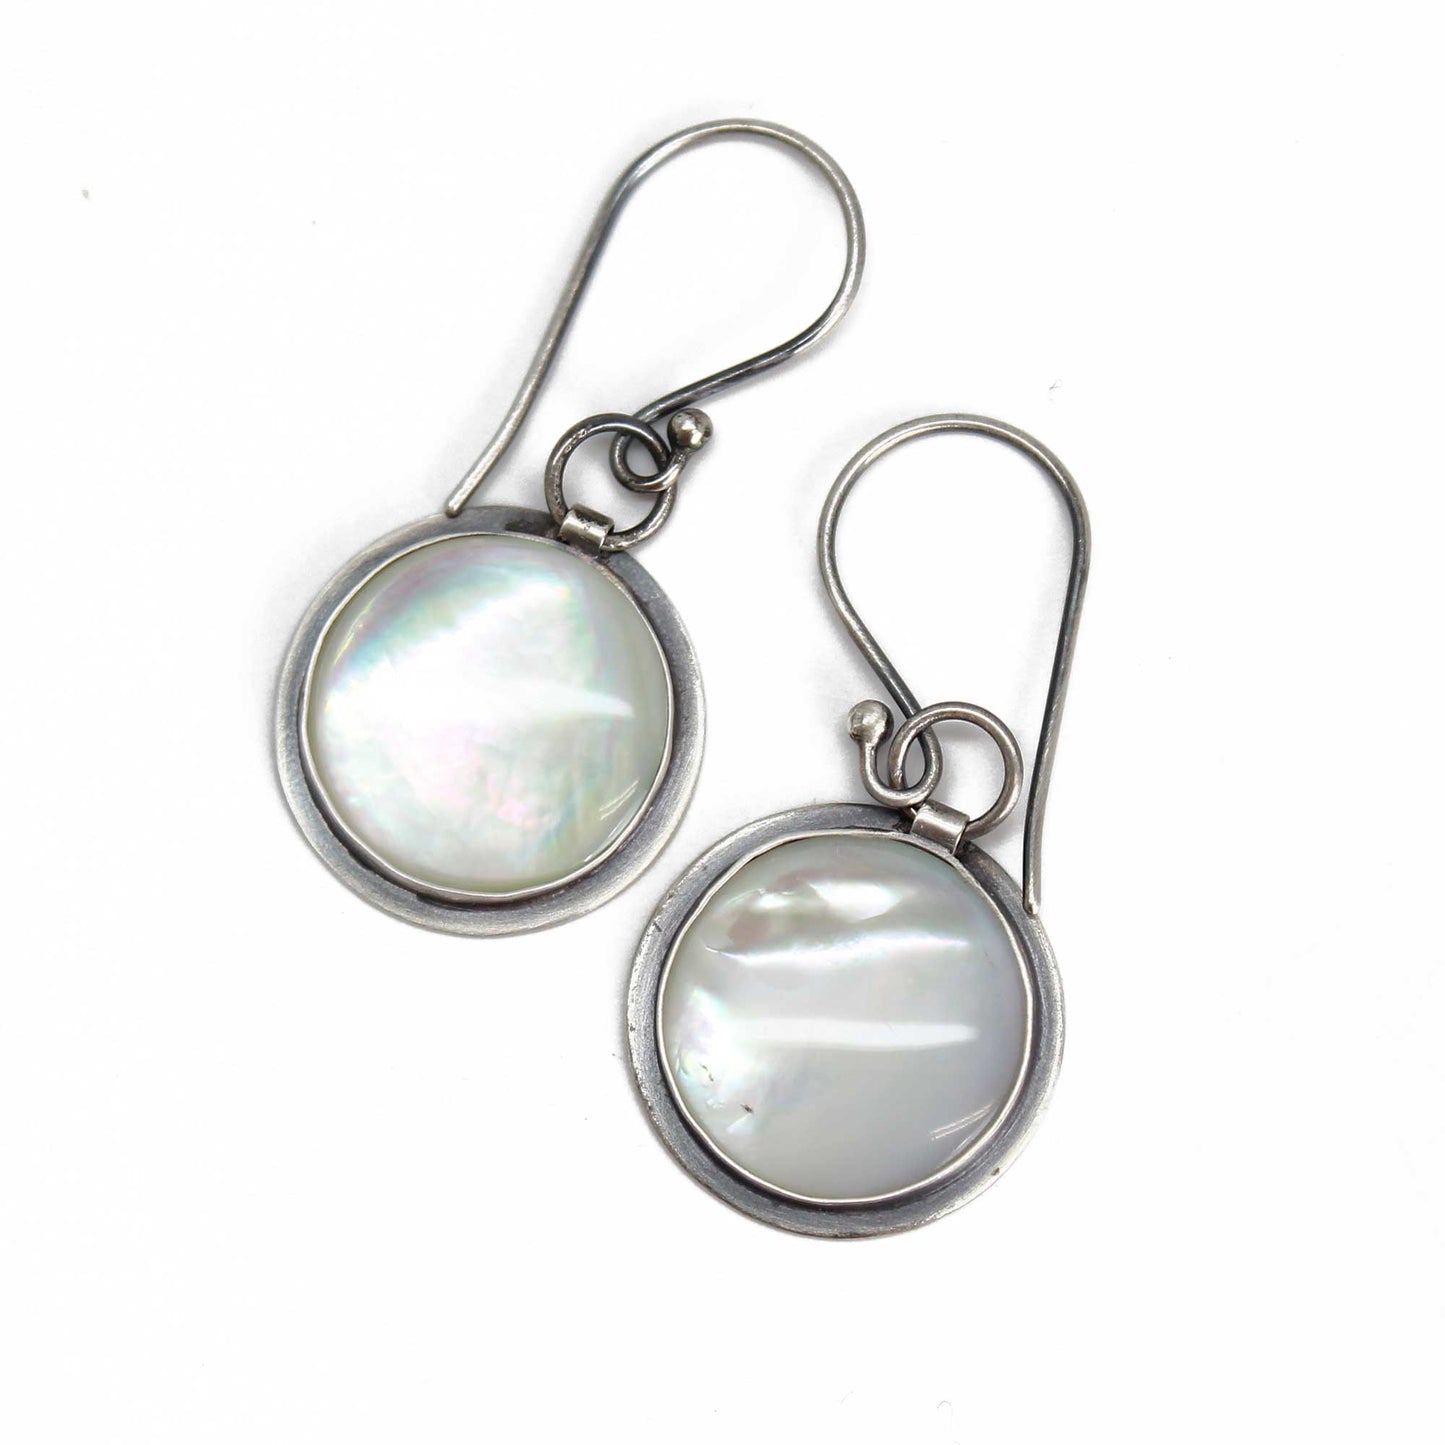 Handmade White Mother of Pearl Earrings in Sterling Silver